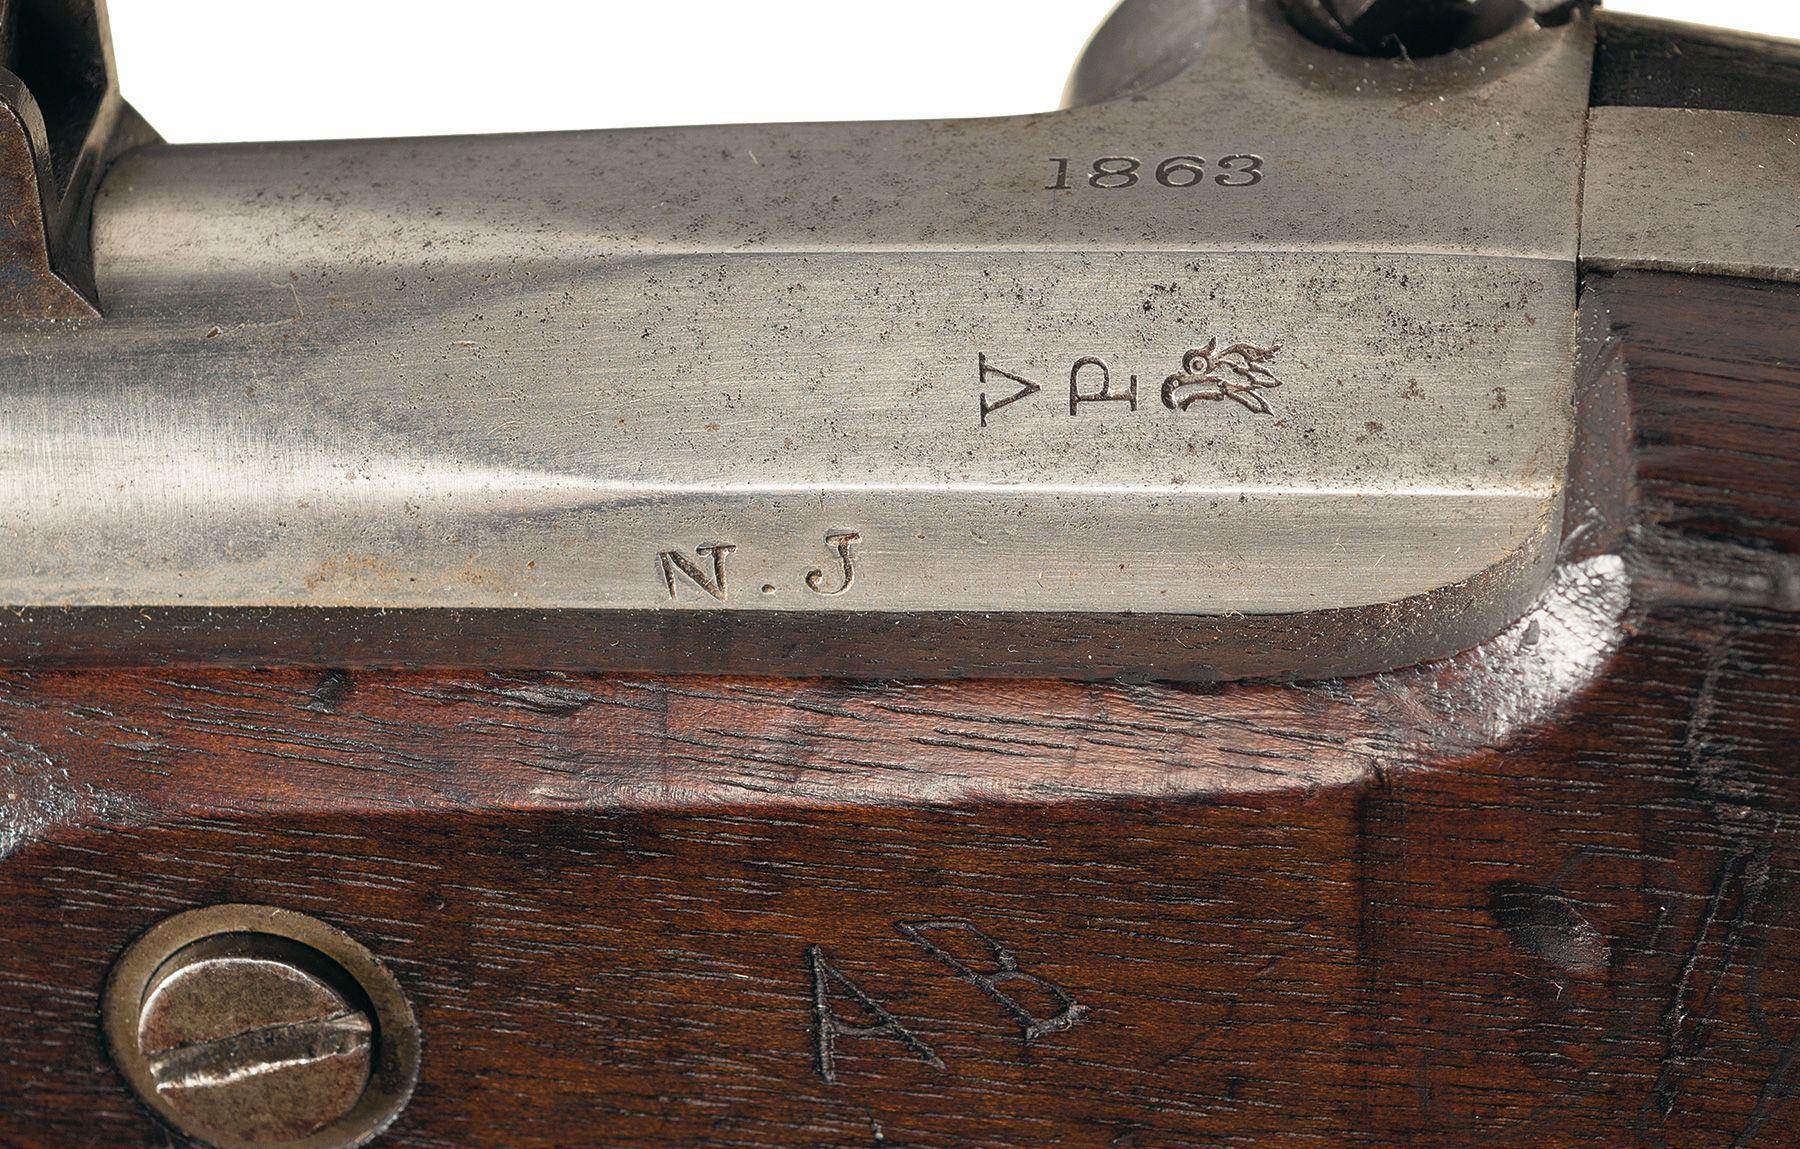 William Mason/New Jersey Contract Model 1861 Rifle-Musket